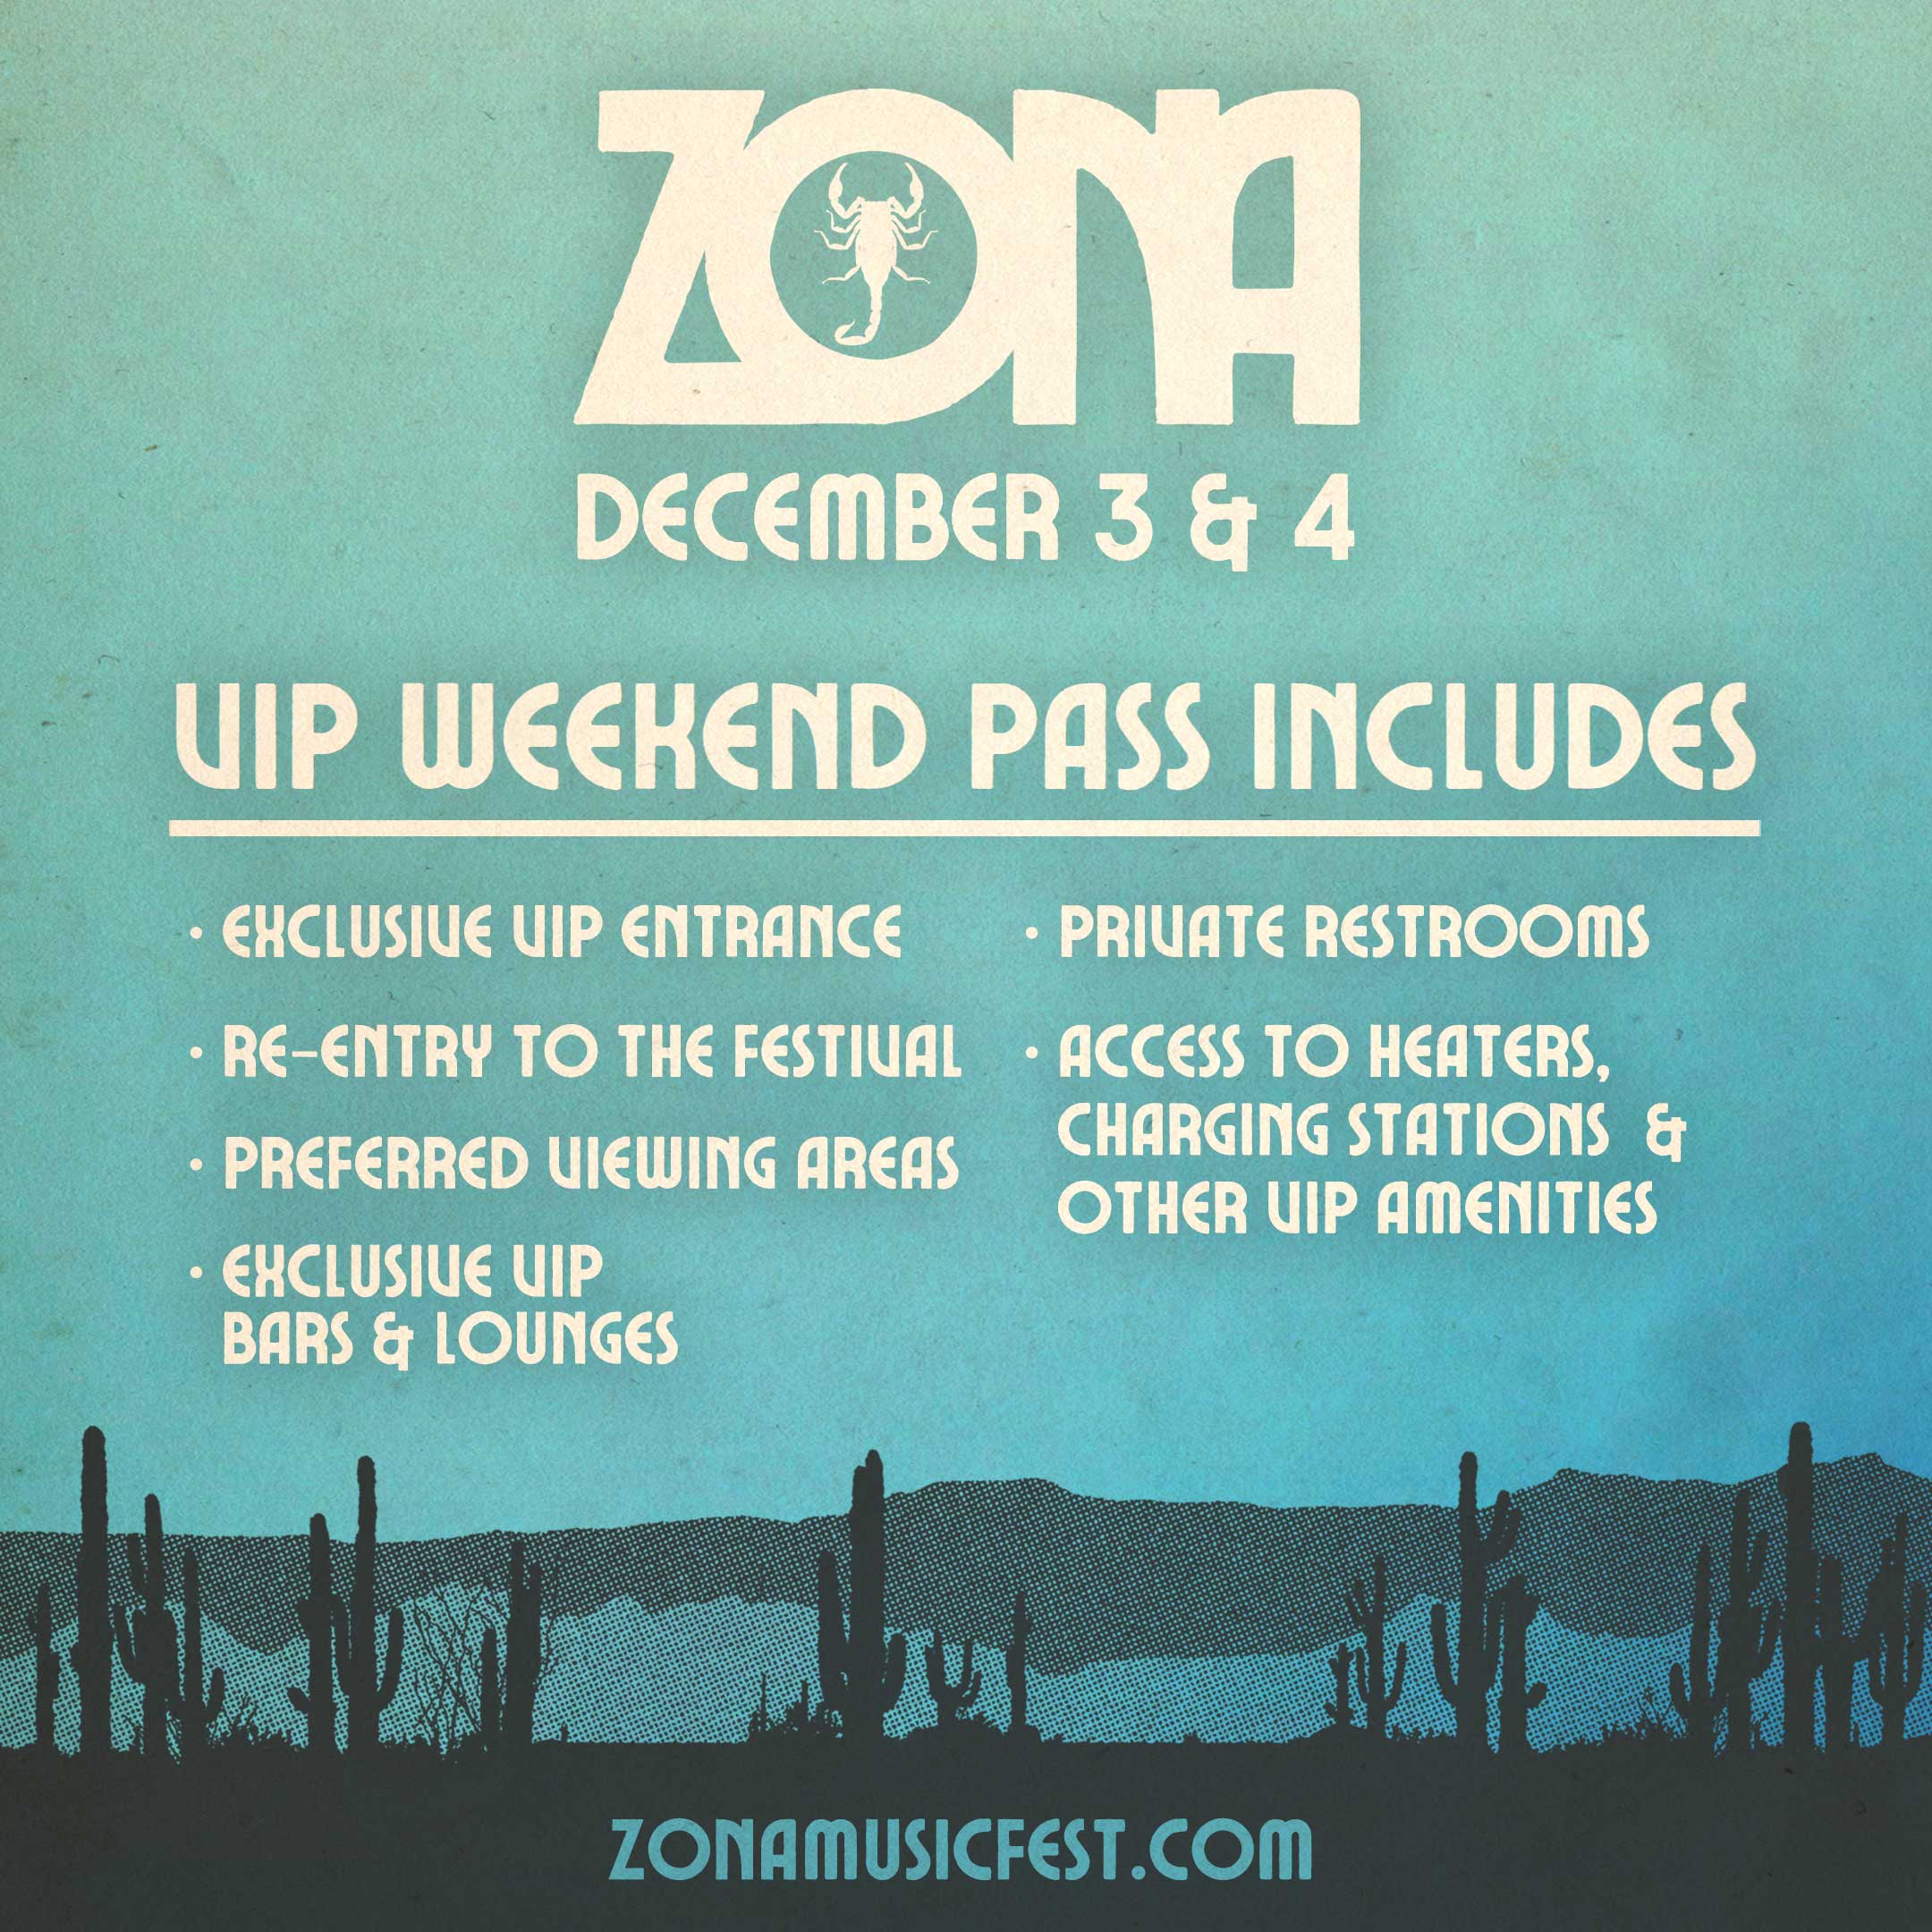 ZONA Music Festival Downtown Phoenix December 3 & 4, 2022